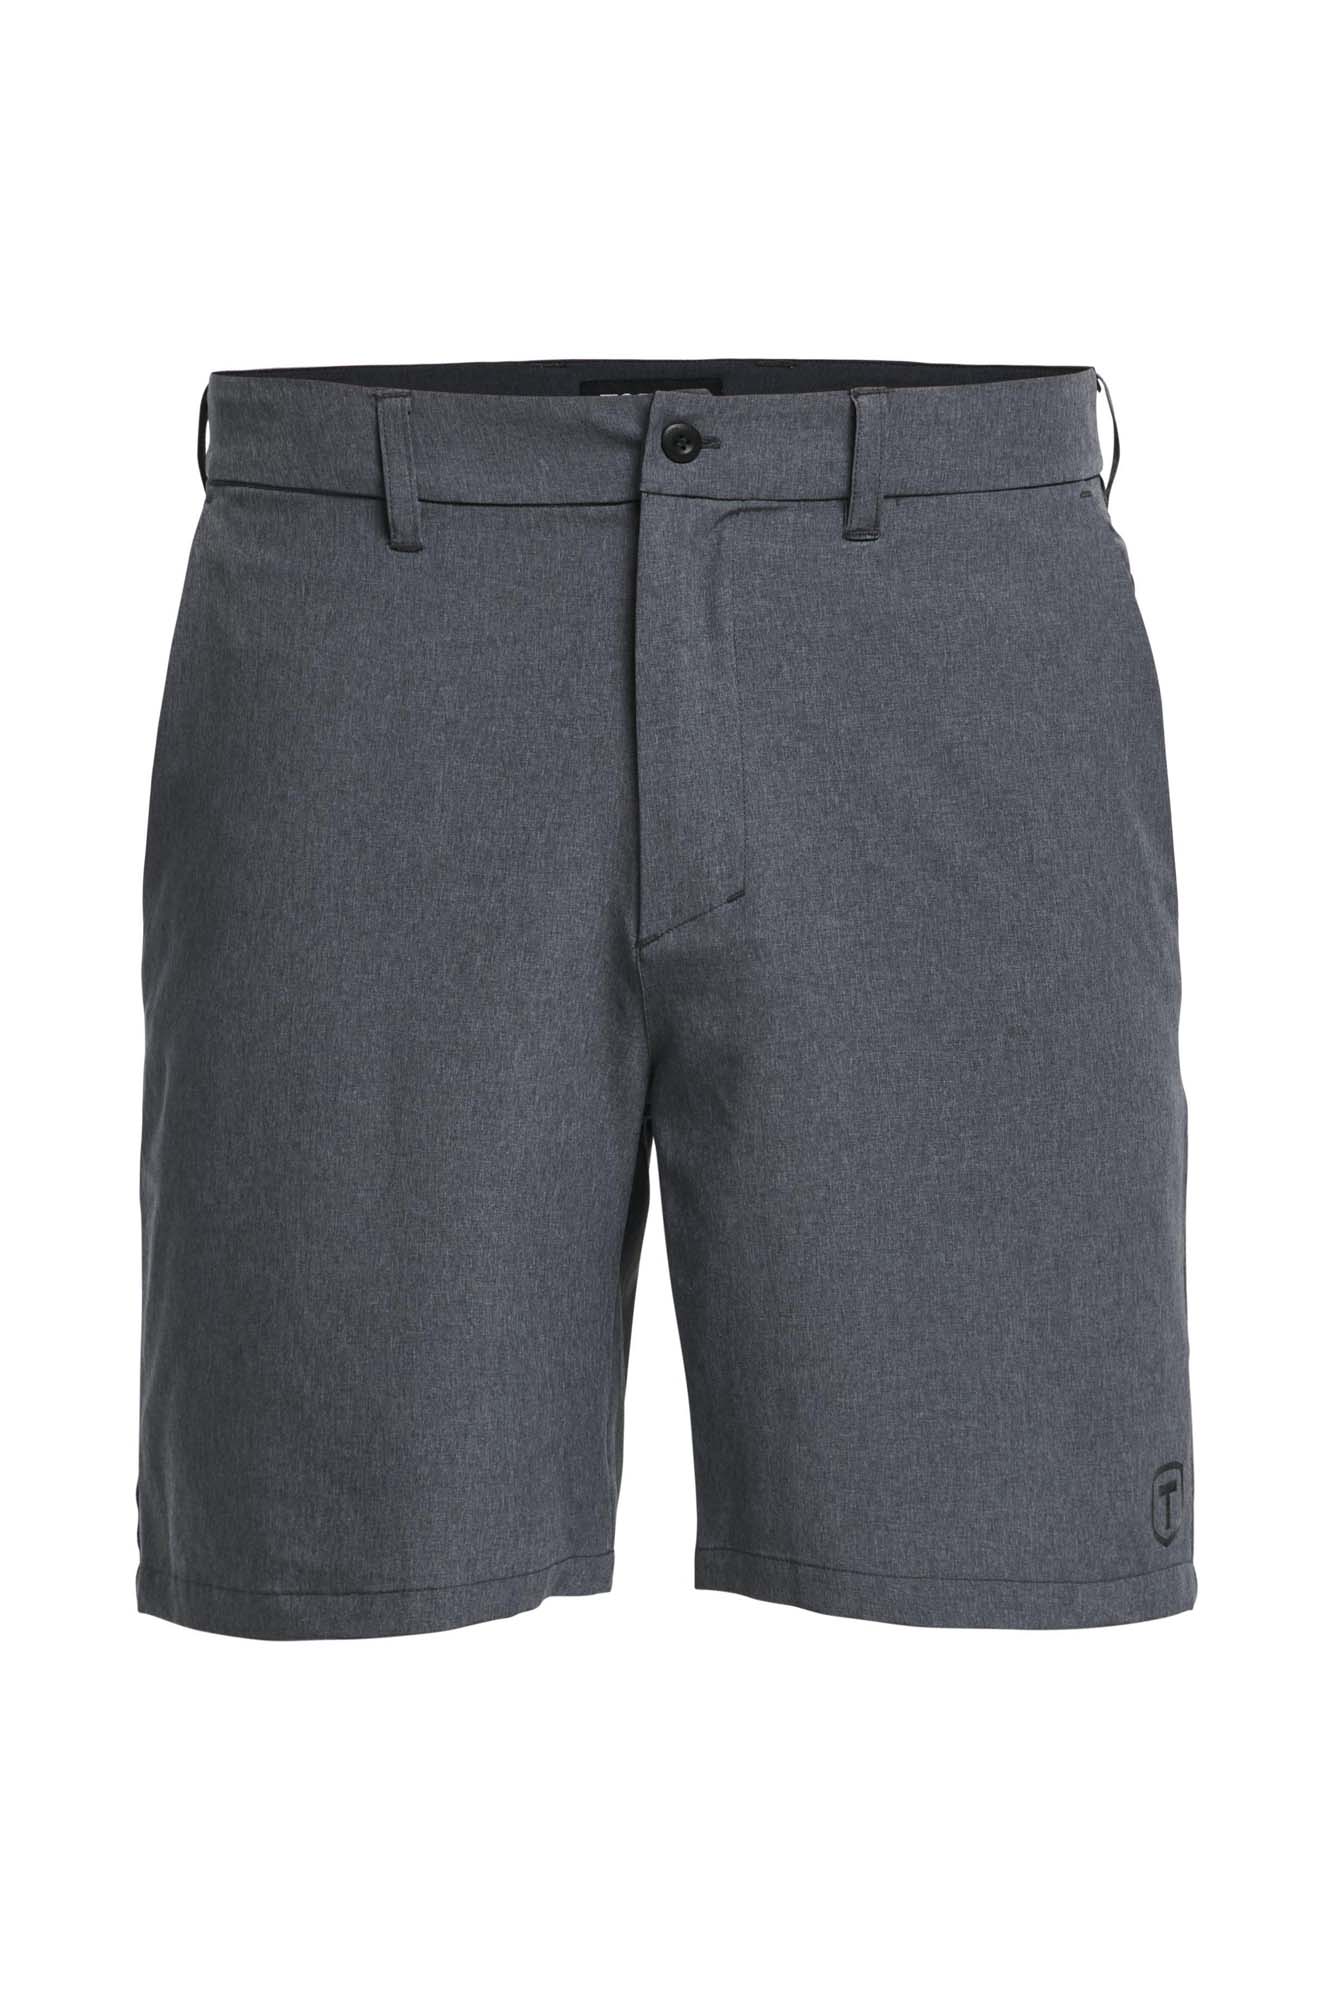 aqua hybrid shorts